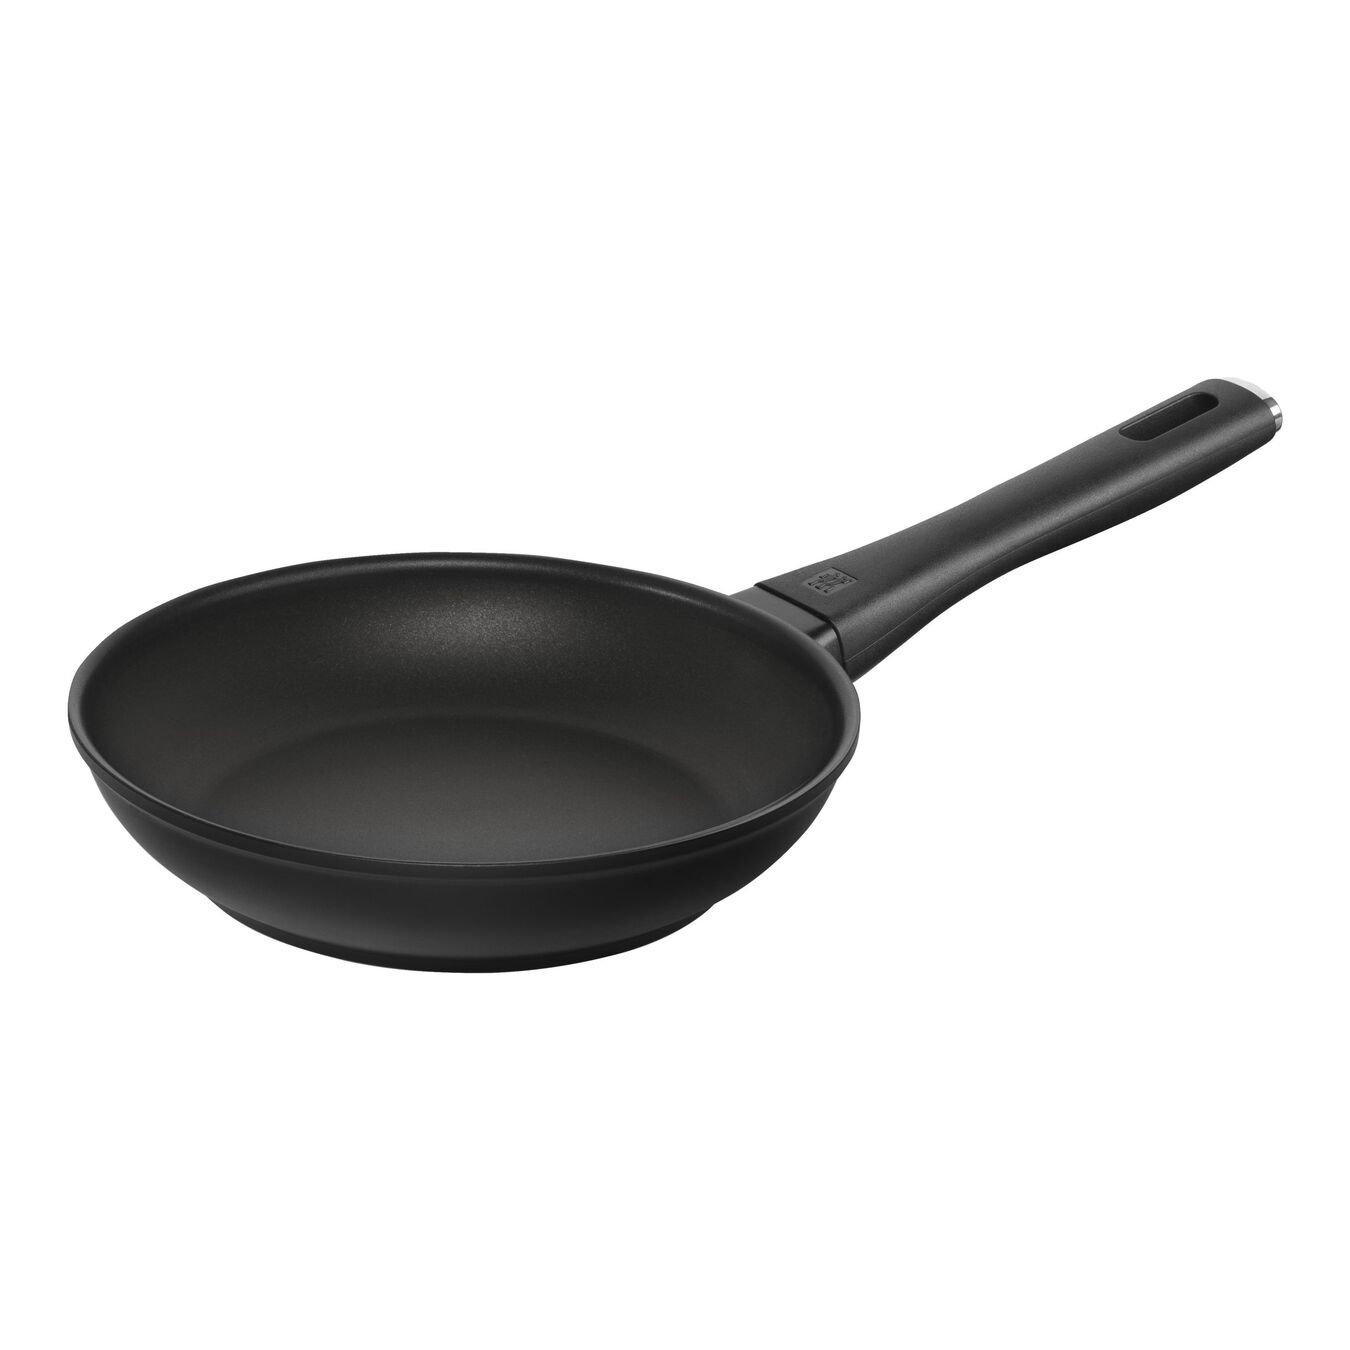 8-inch, Non-stick, Aluminum Fry Pan,,large 3